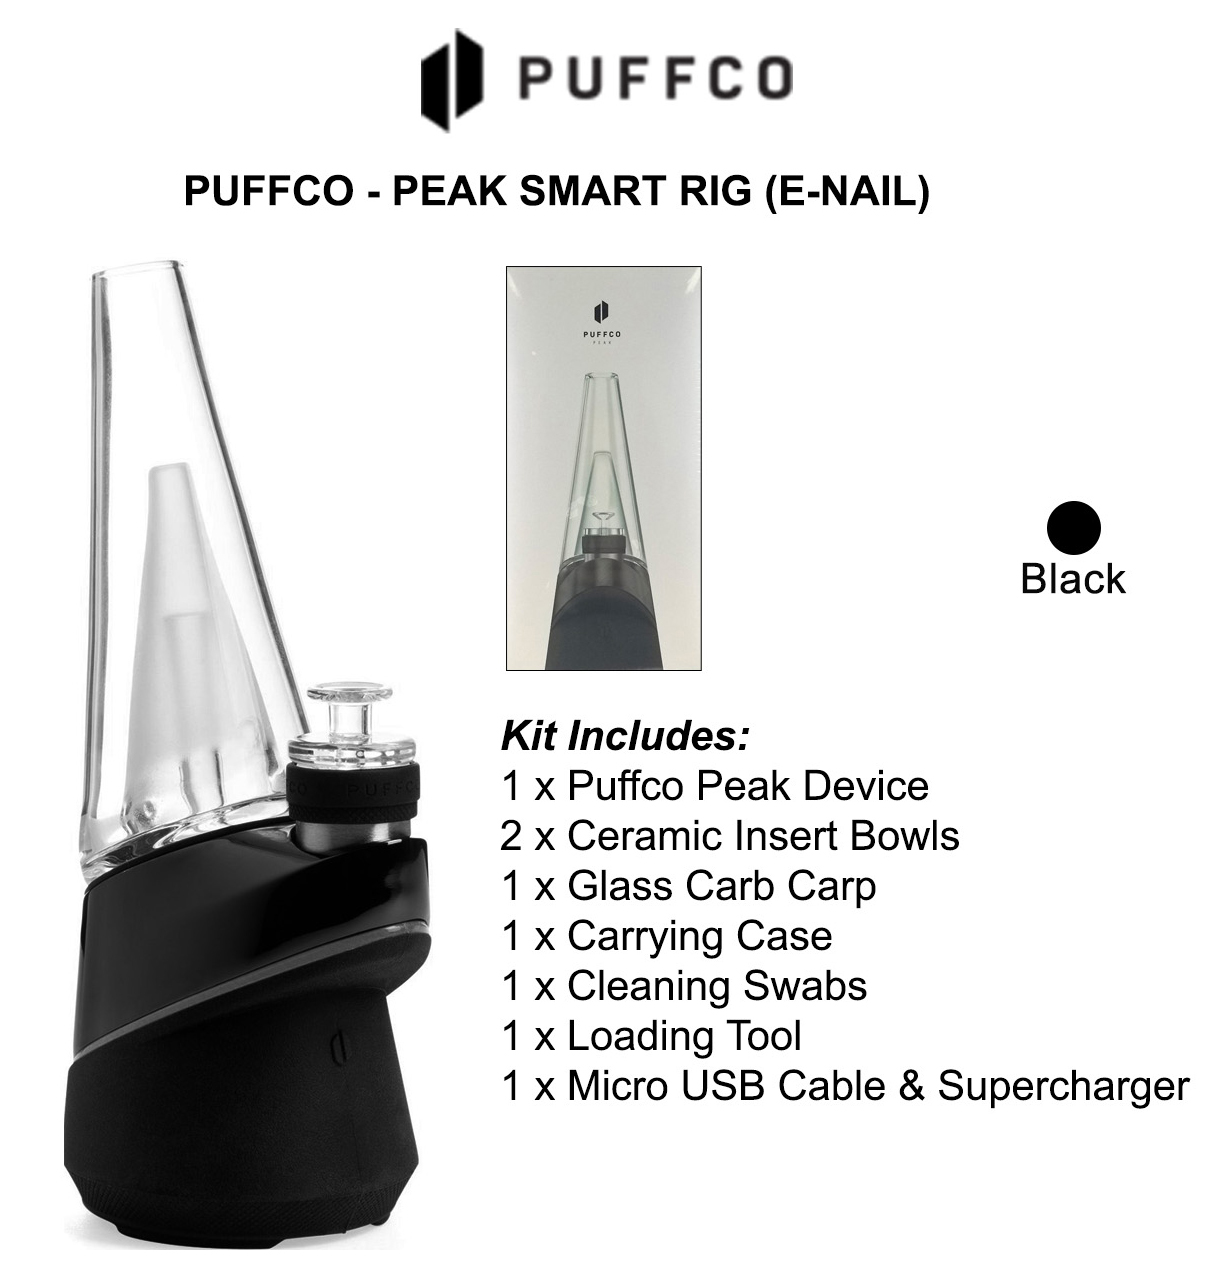 Puffco Peak Smart Rig E nail